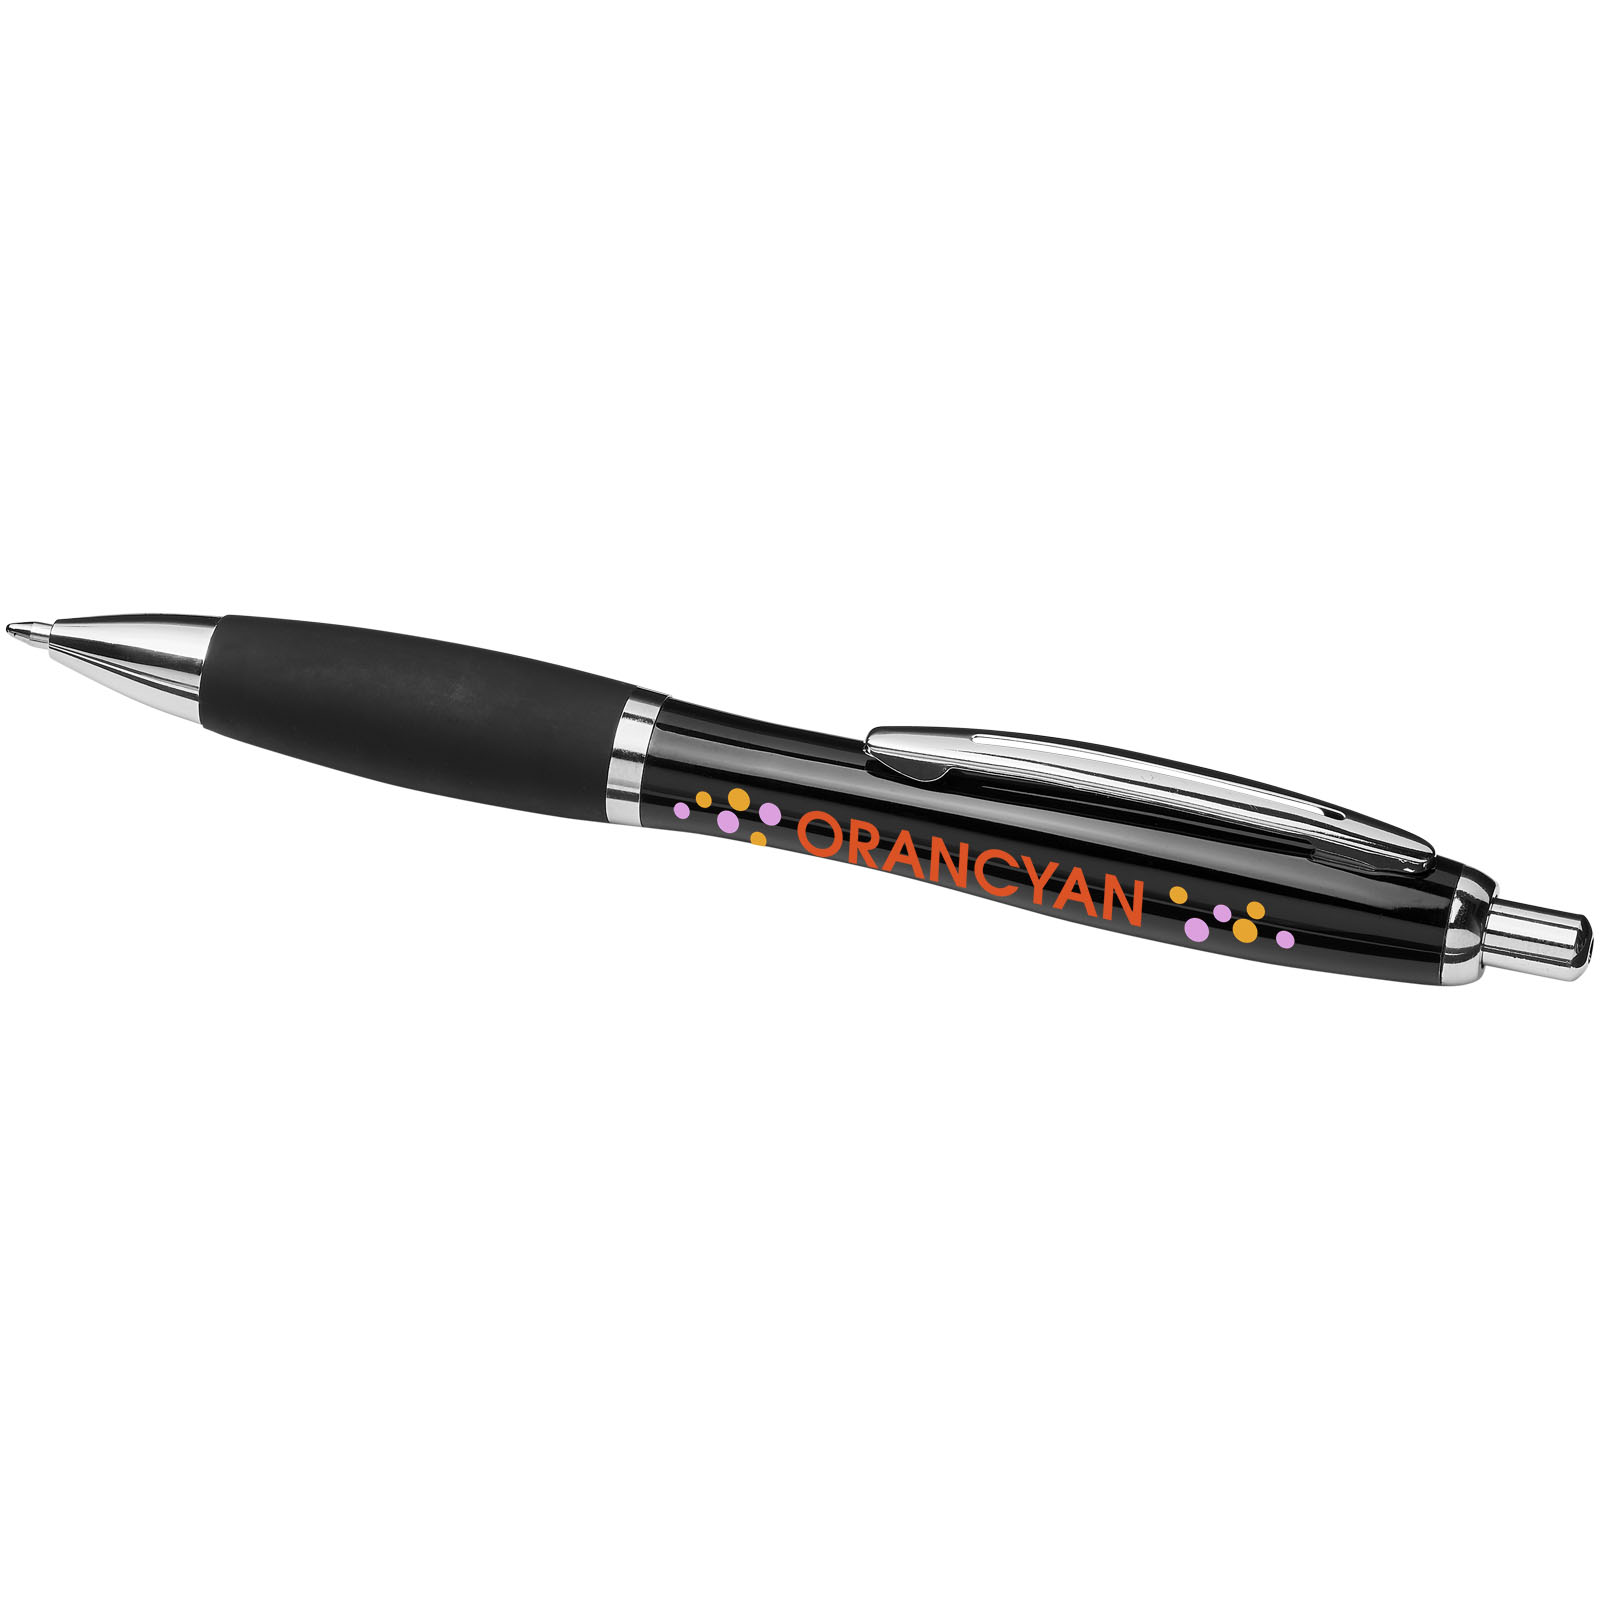 Curvy ballpoint pen with metal barrel